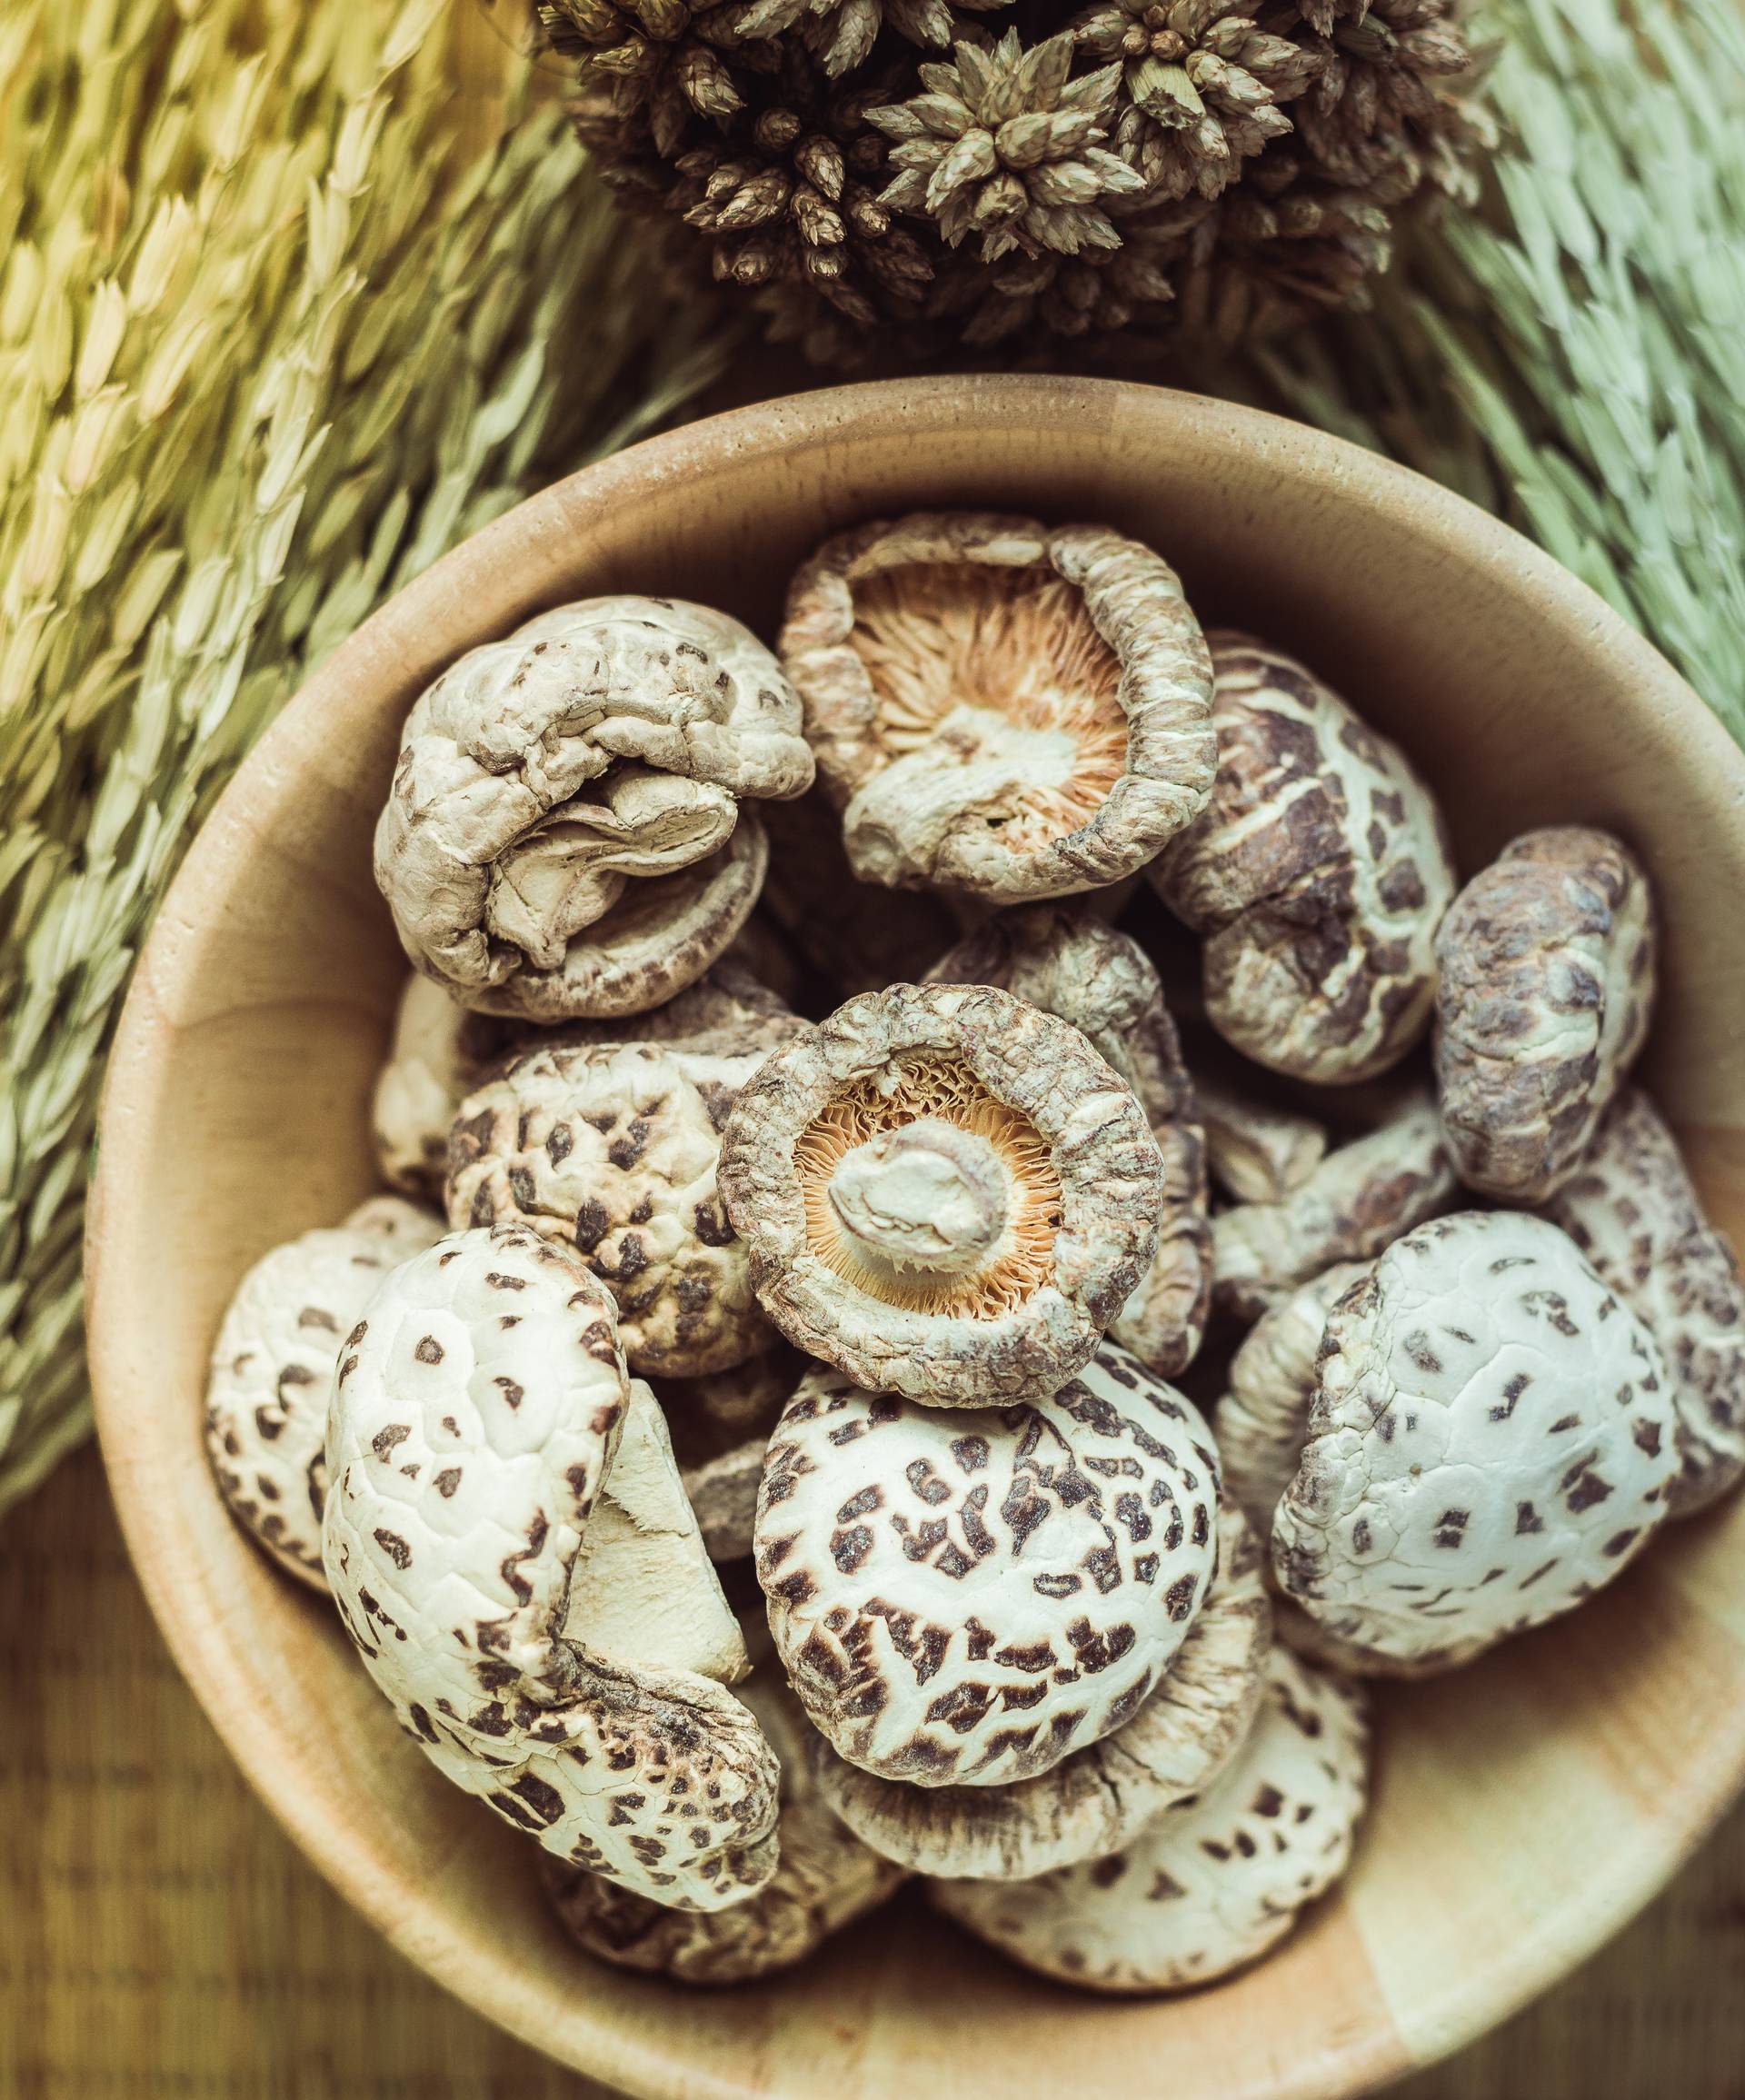 Moćne kineske gljive protiv tumora i upala - reishi, shiitake